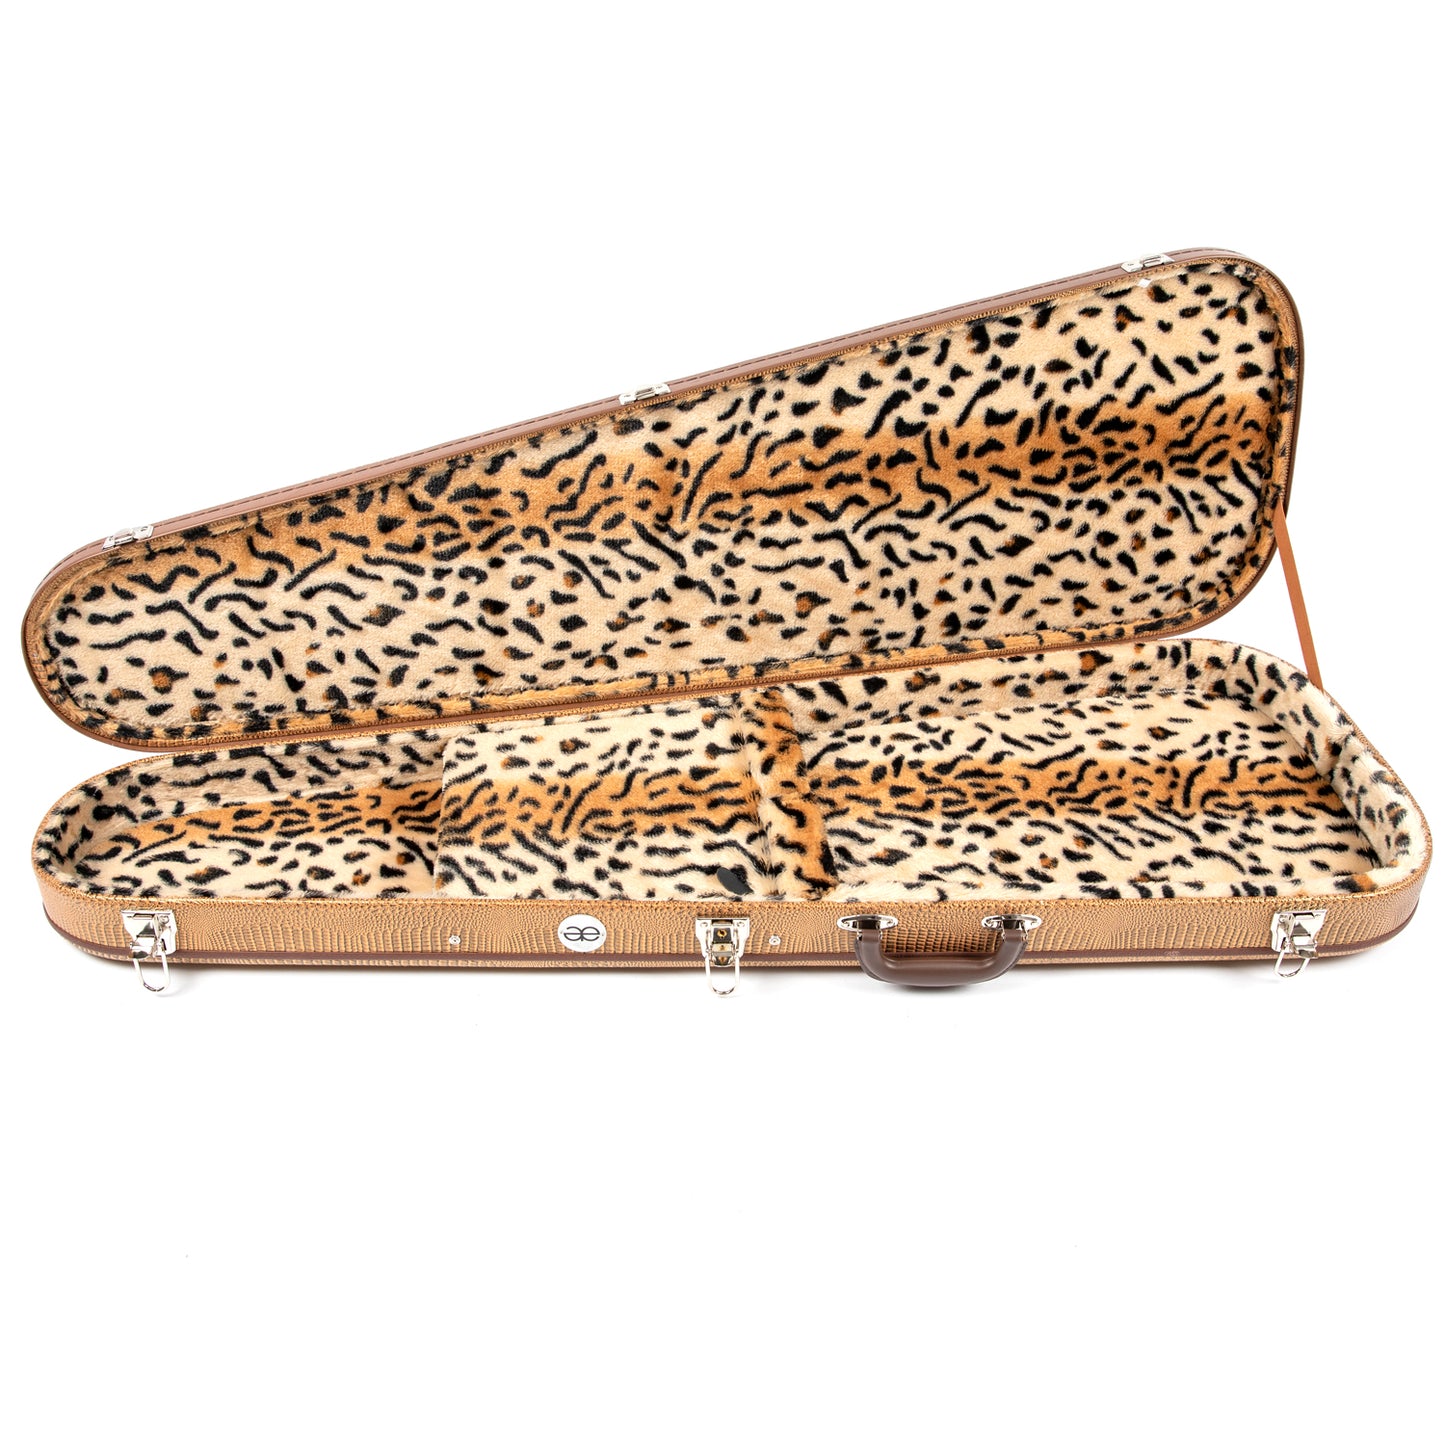 Allen Eden Snake Skin Teardrop Bass Case with Cheetah Plush Lining